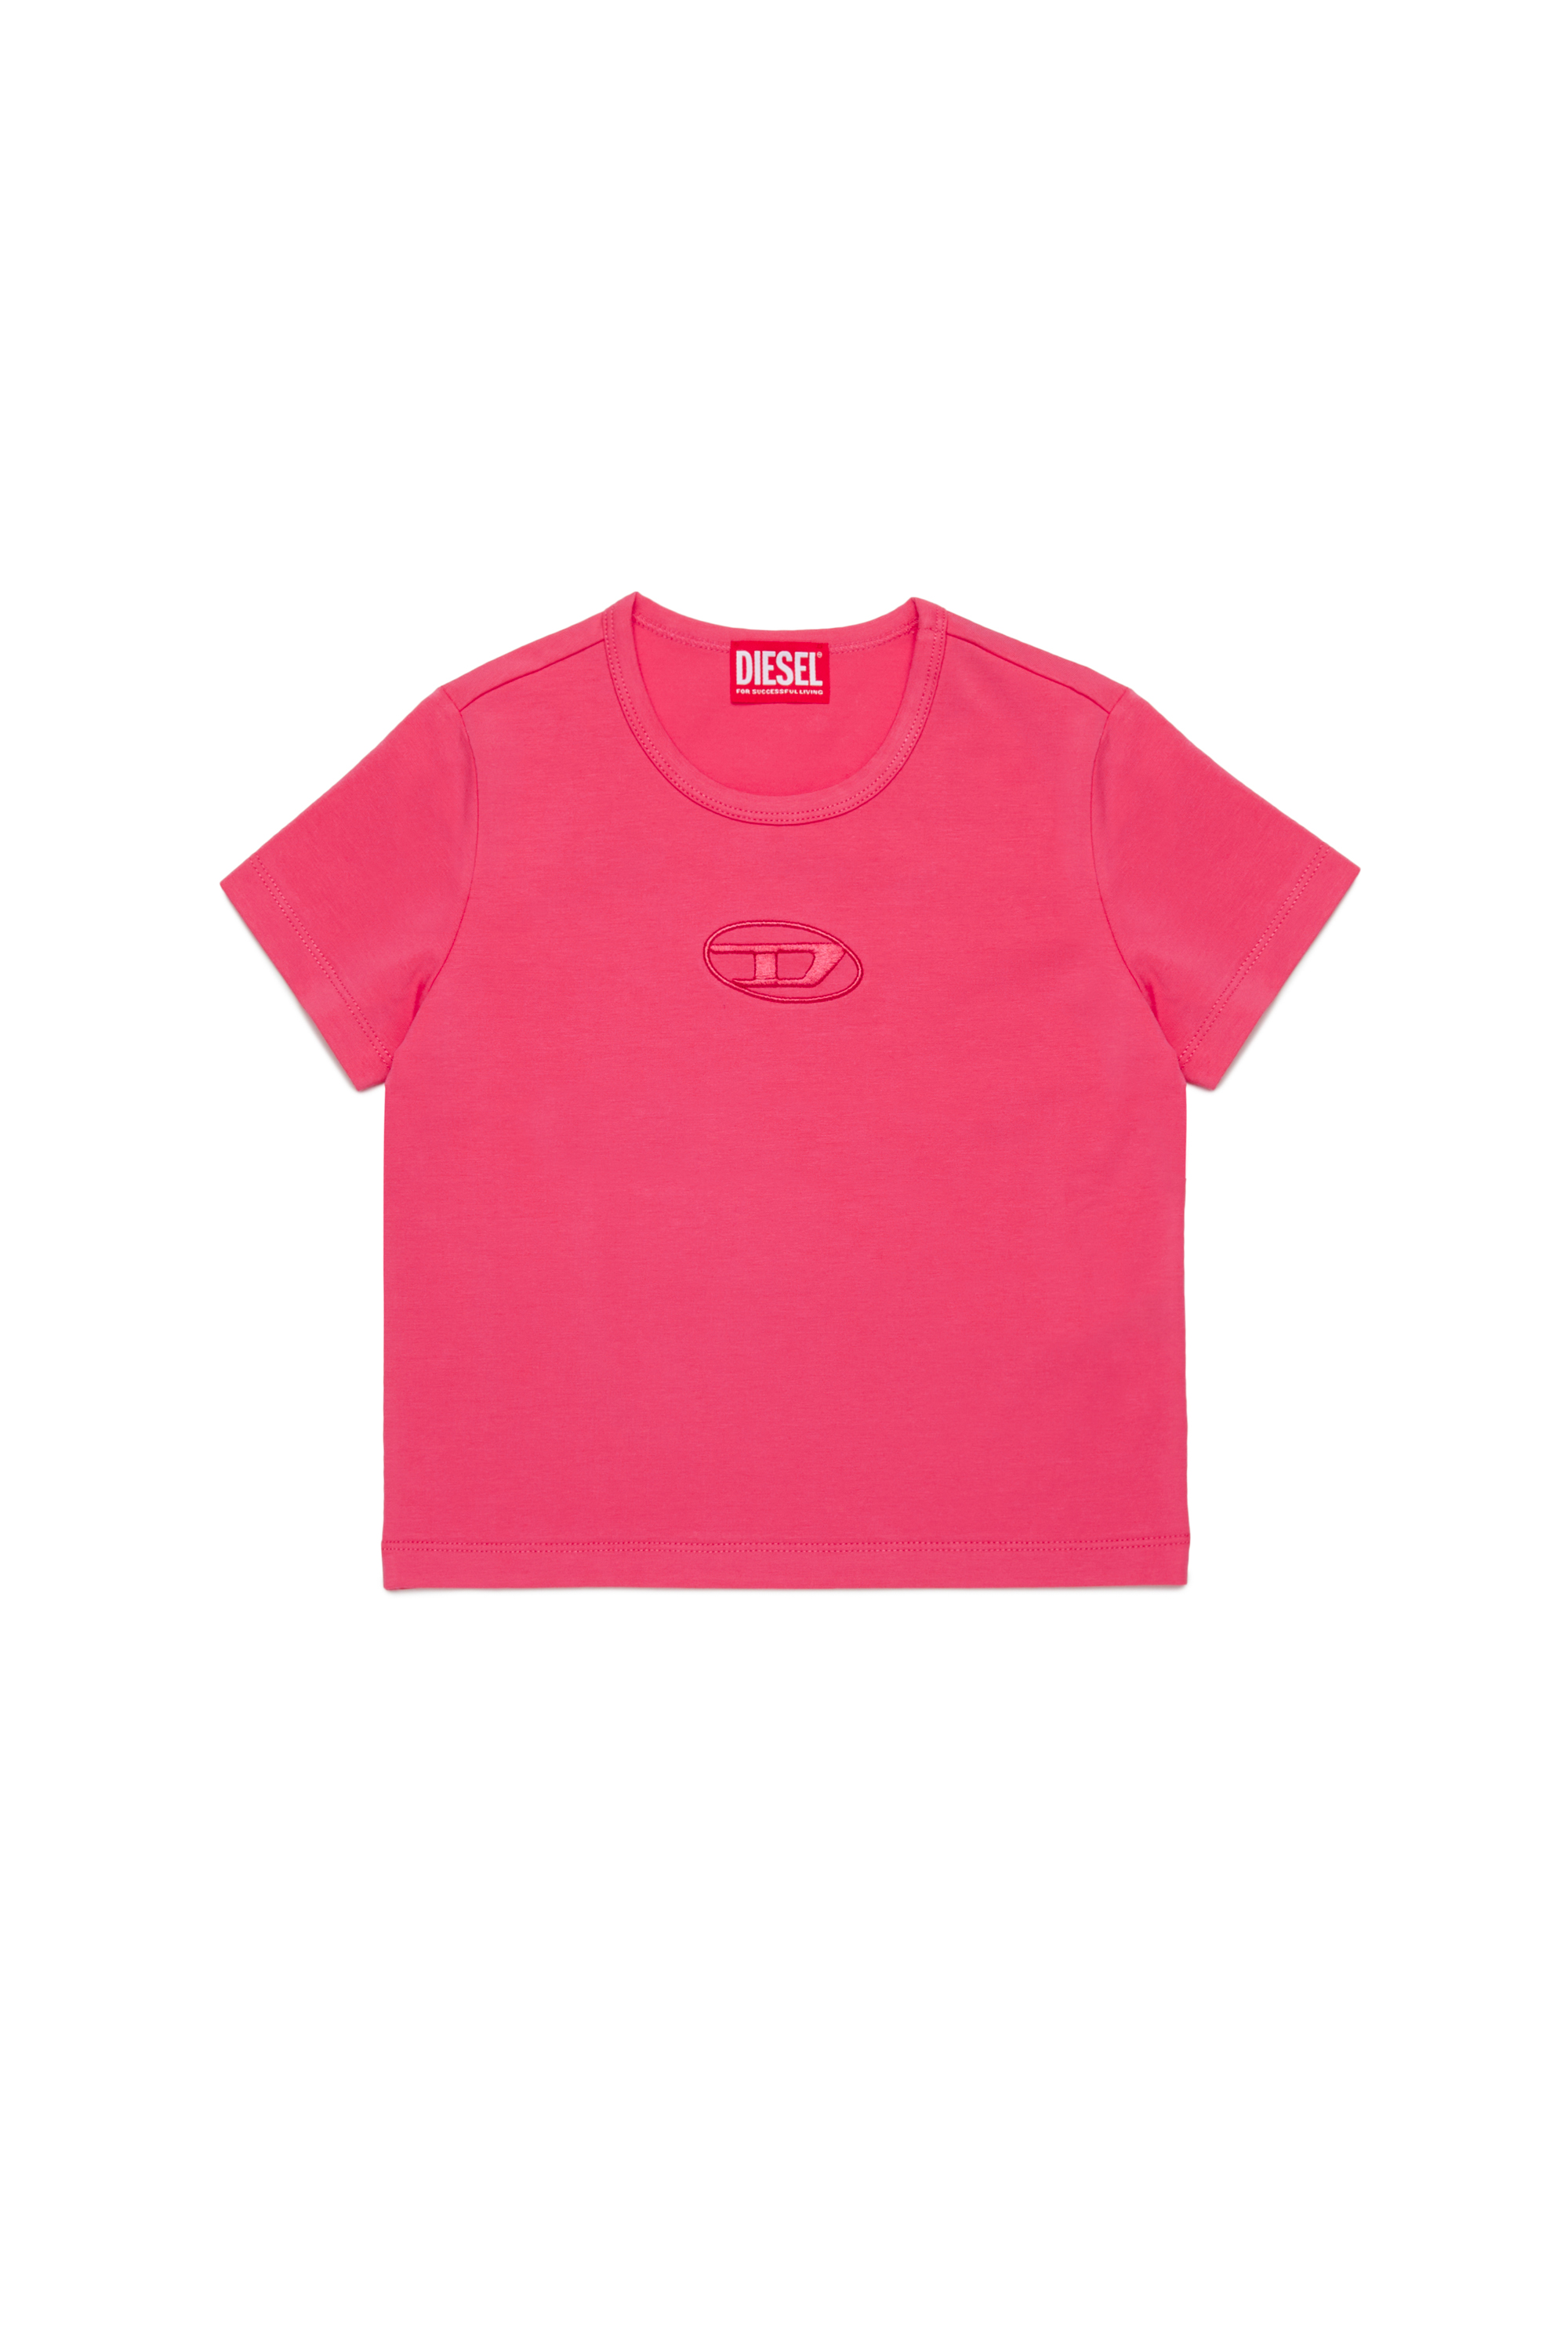 Diesel - TANGIEX, Mujer Camiseta con bordado Oval D a tono in Rosa - Image 1